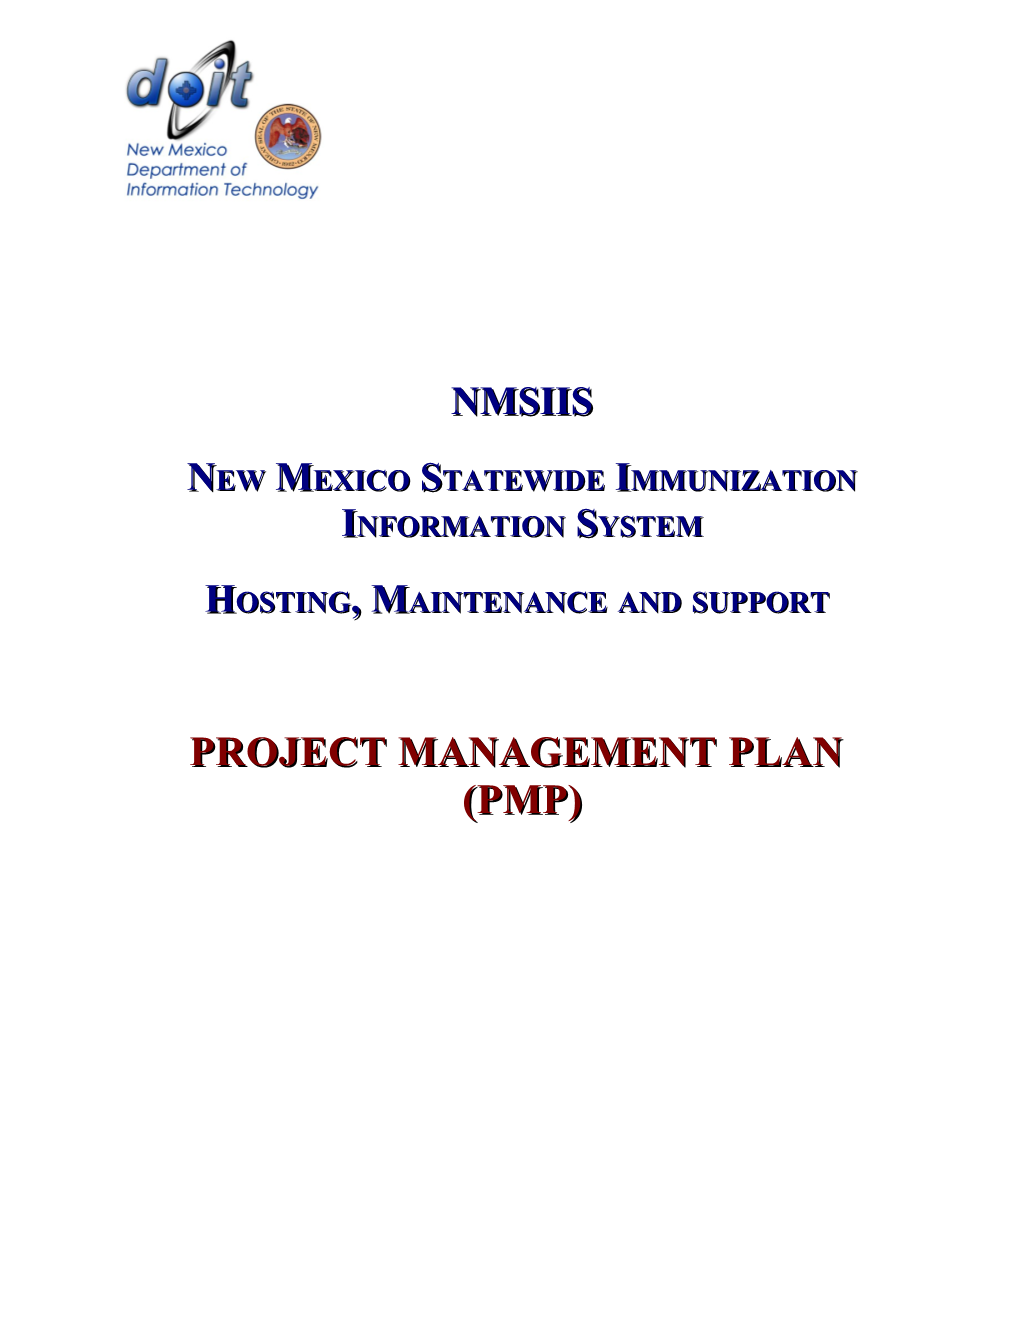 New Mexico Statewide Immunization Information System